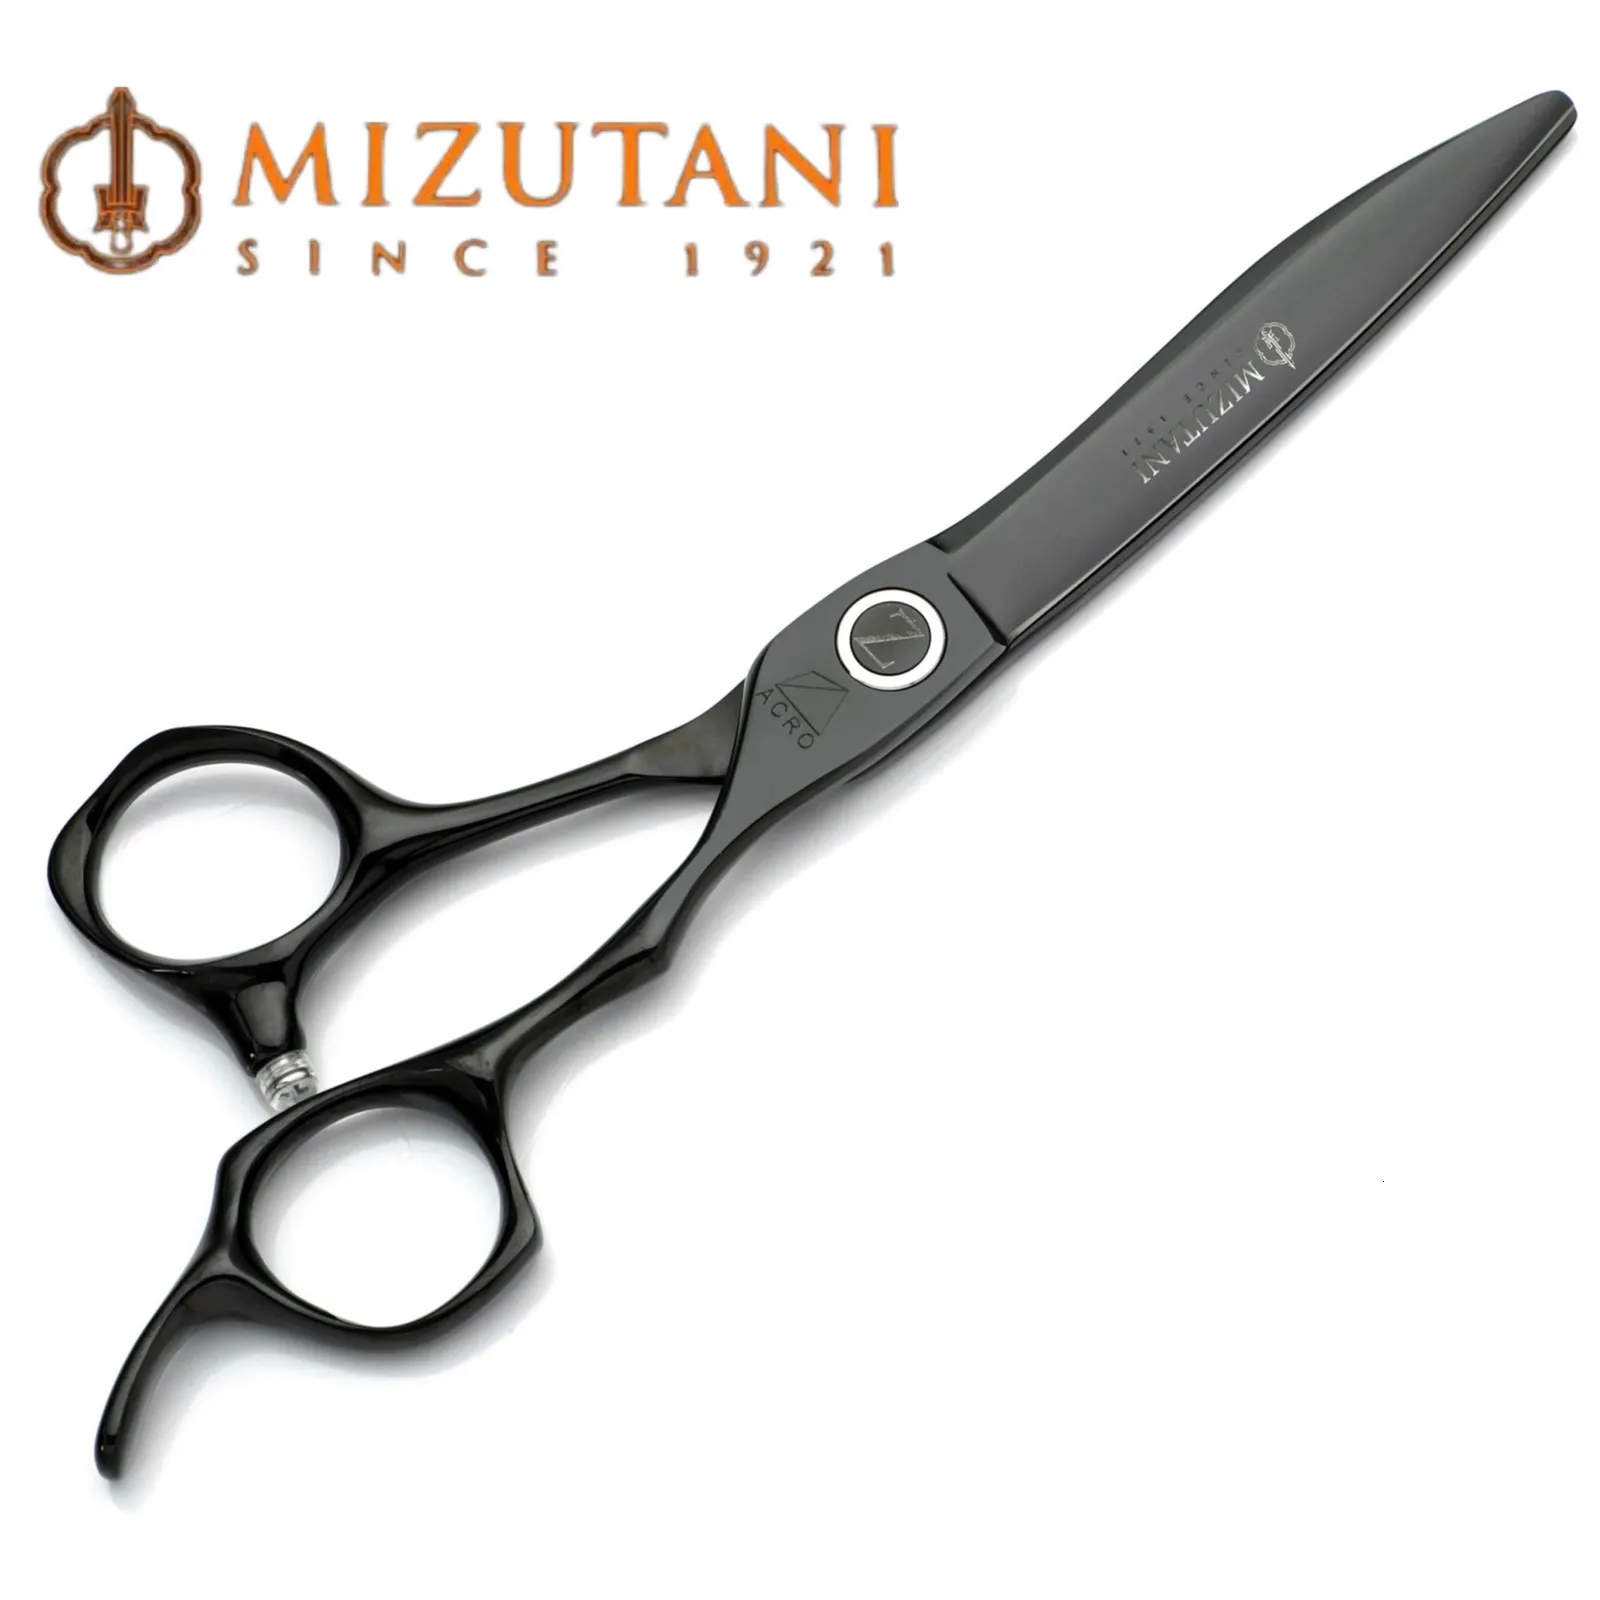 Mizutani Barber Scissors 60インチ440Cマテリアルヘアカッティングマシンプロフェッショナルヘアドレスハサミツールセット240315